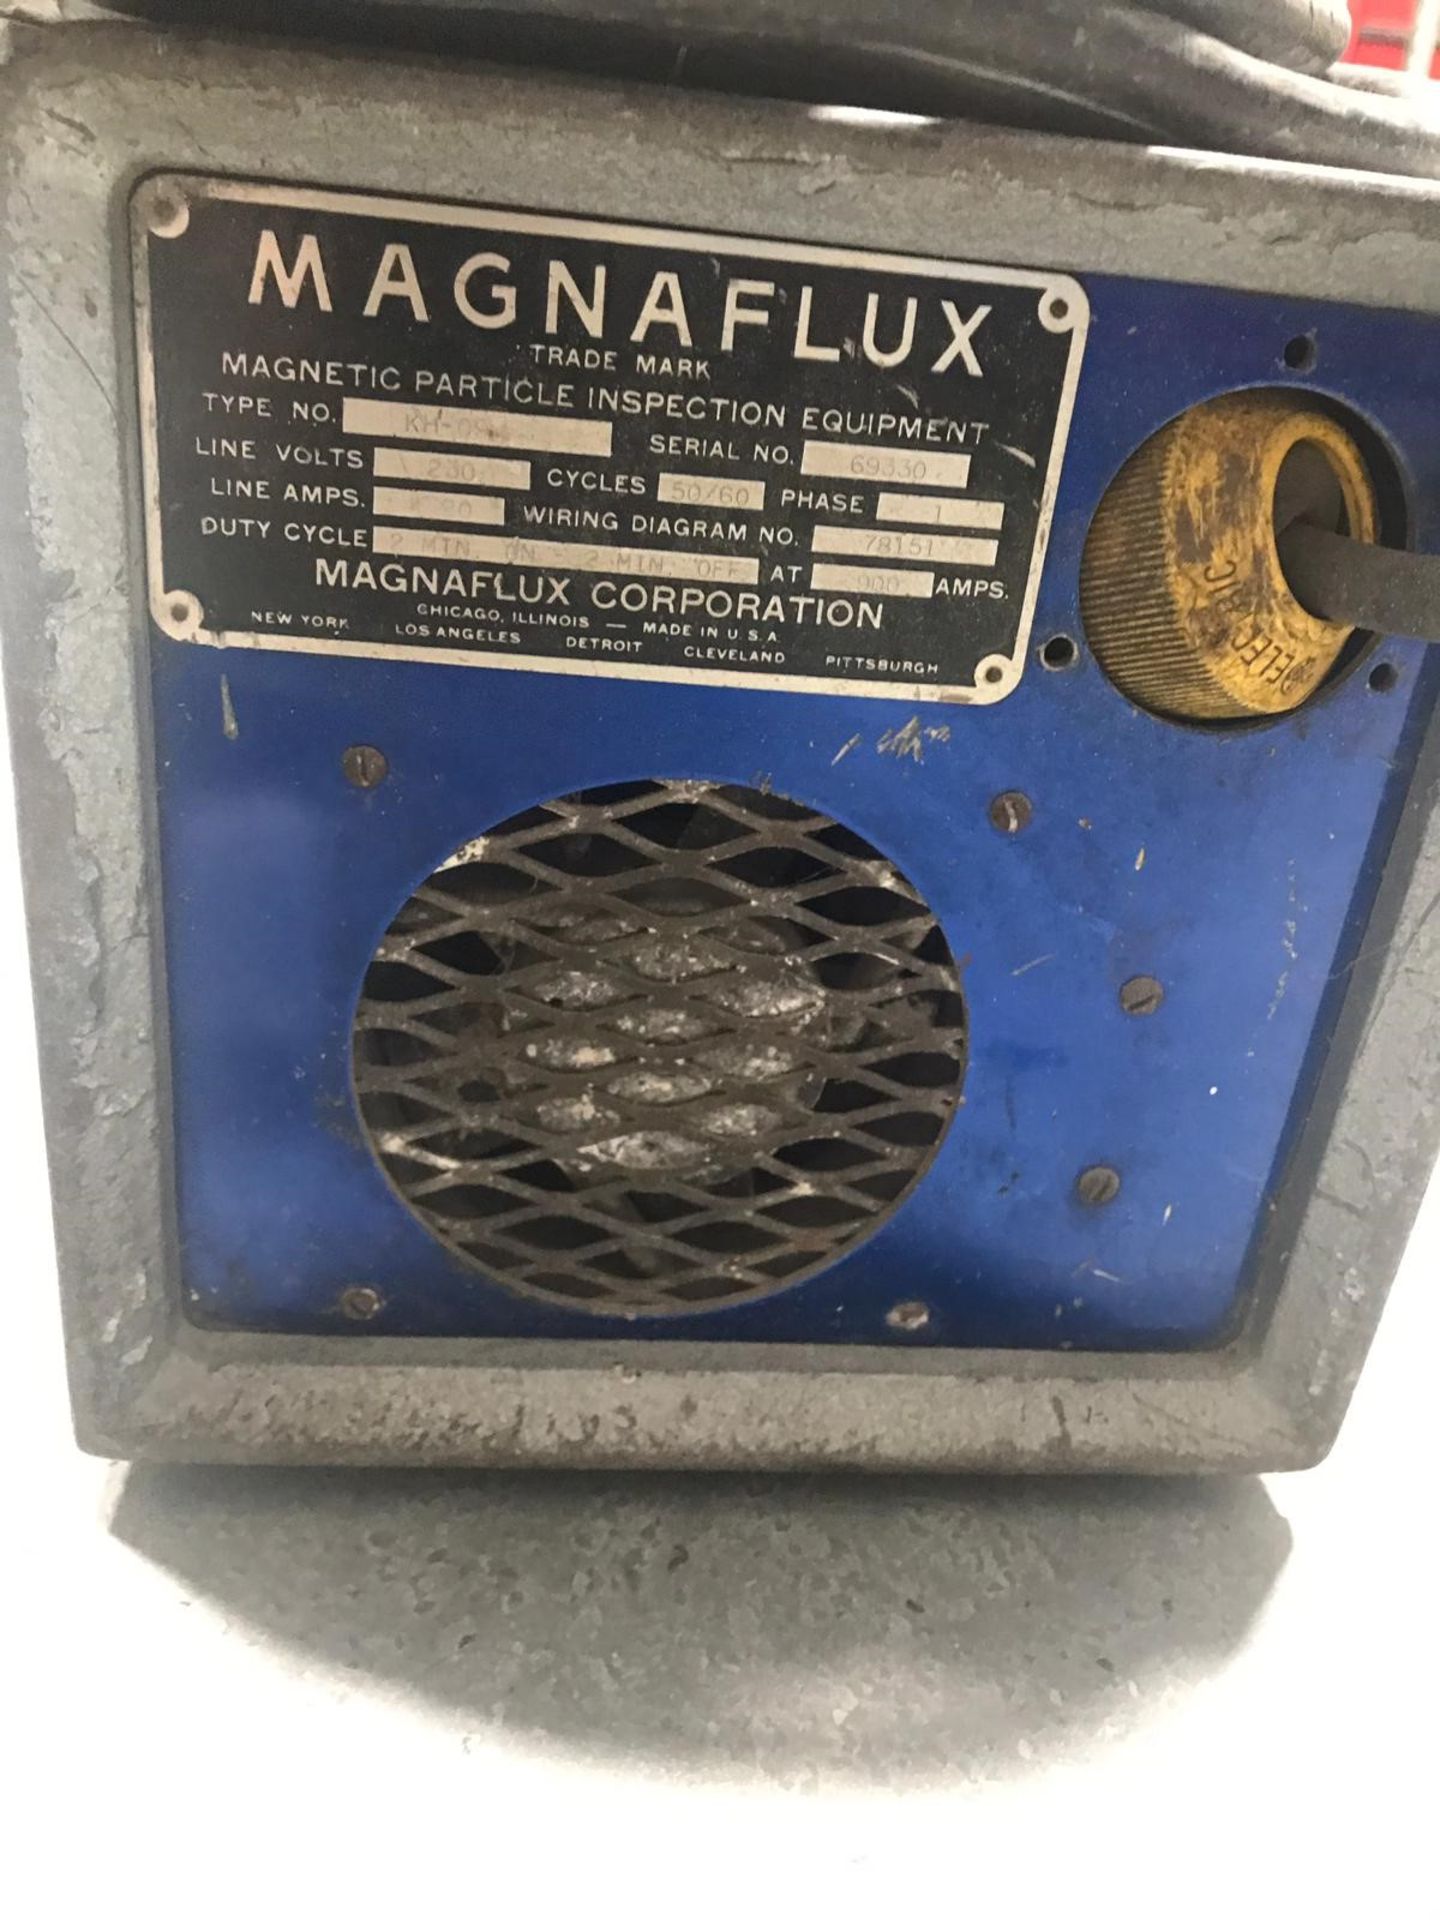 MAGNAFLUX Magnetic Particle inspection Equipment